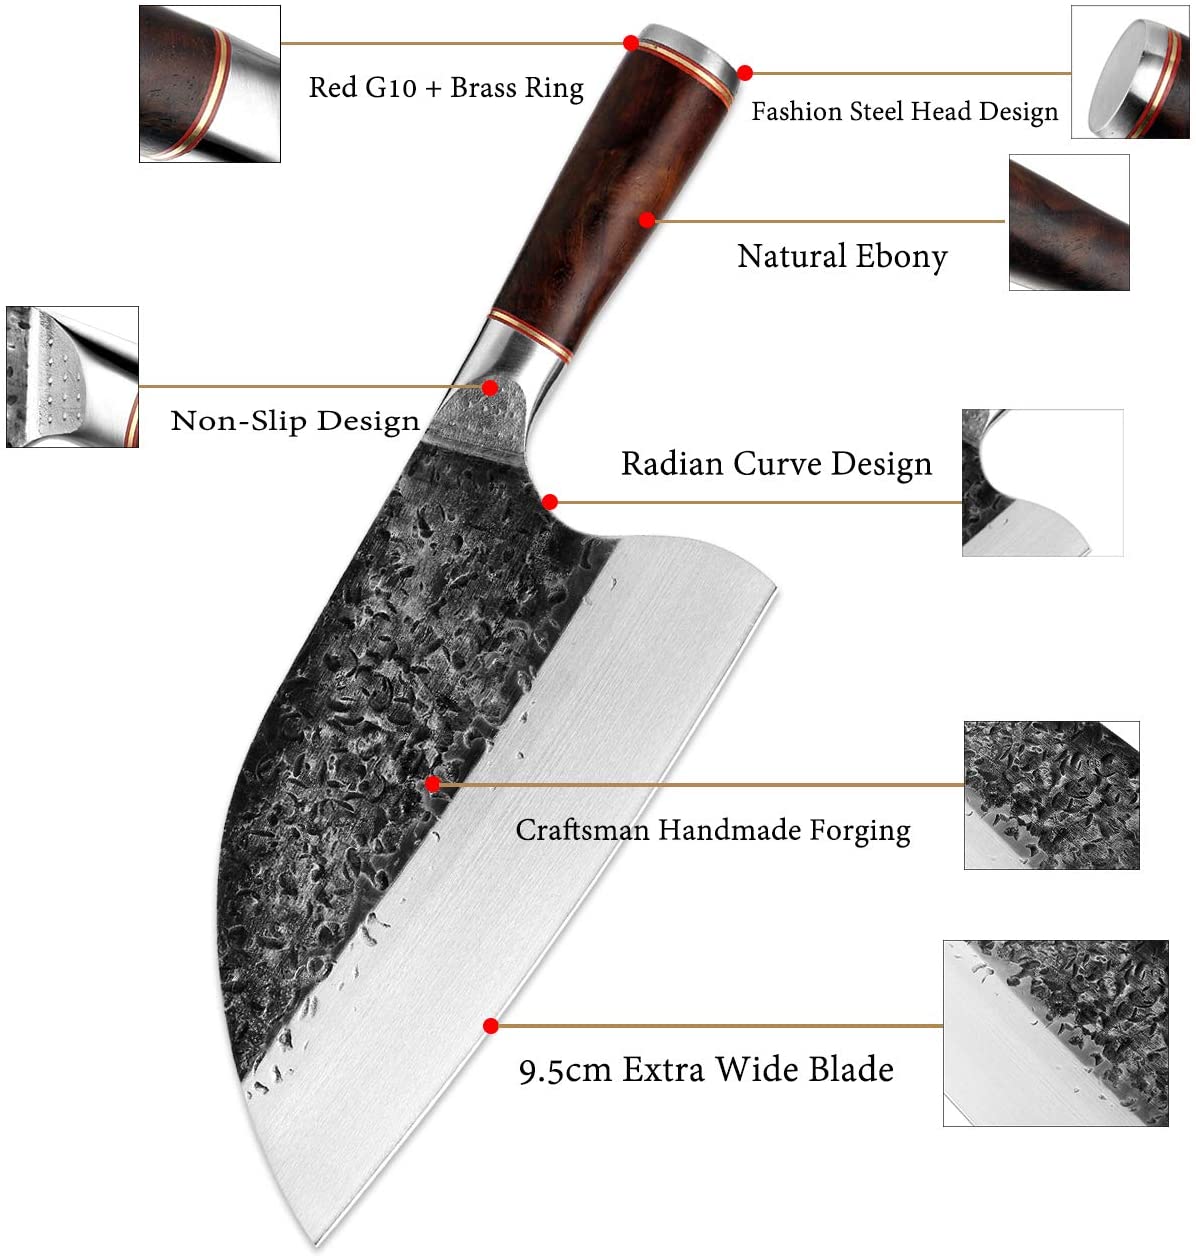 Tarrerias Bonjean Maestro Ideal Kitchen Knife Series Nitrox® Steel